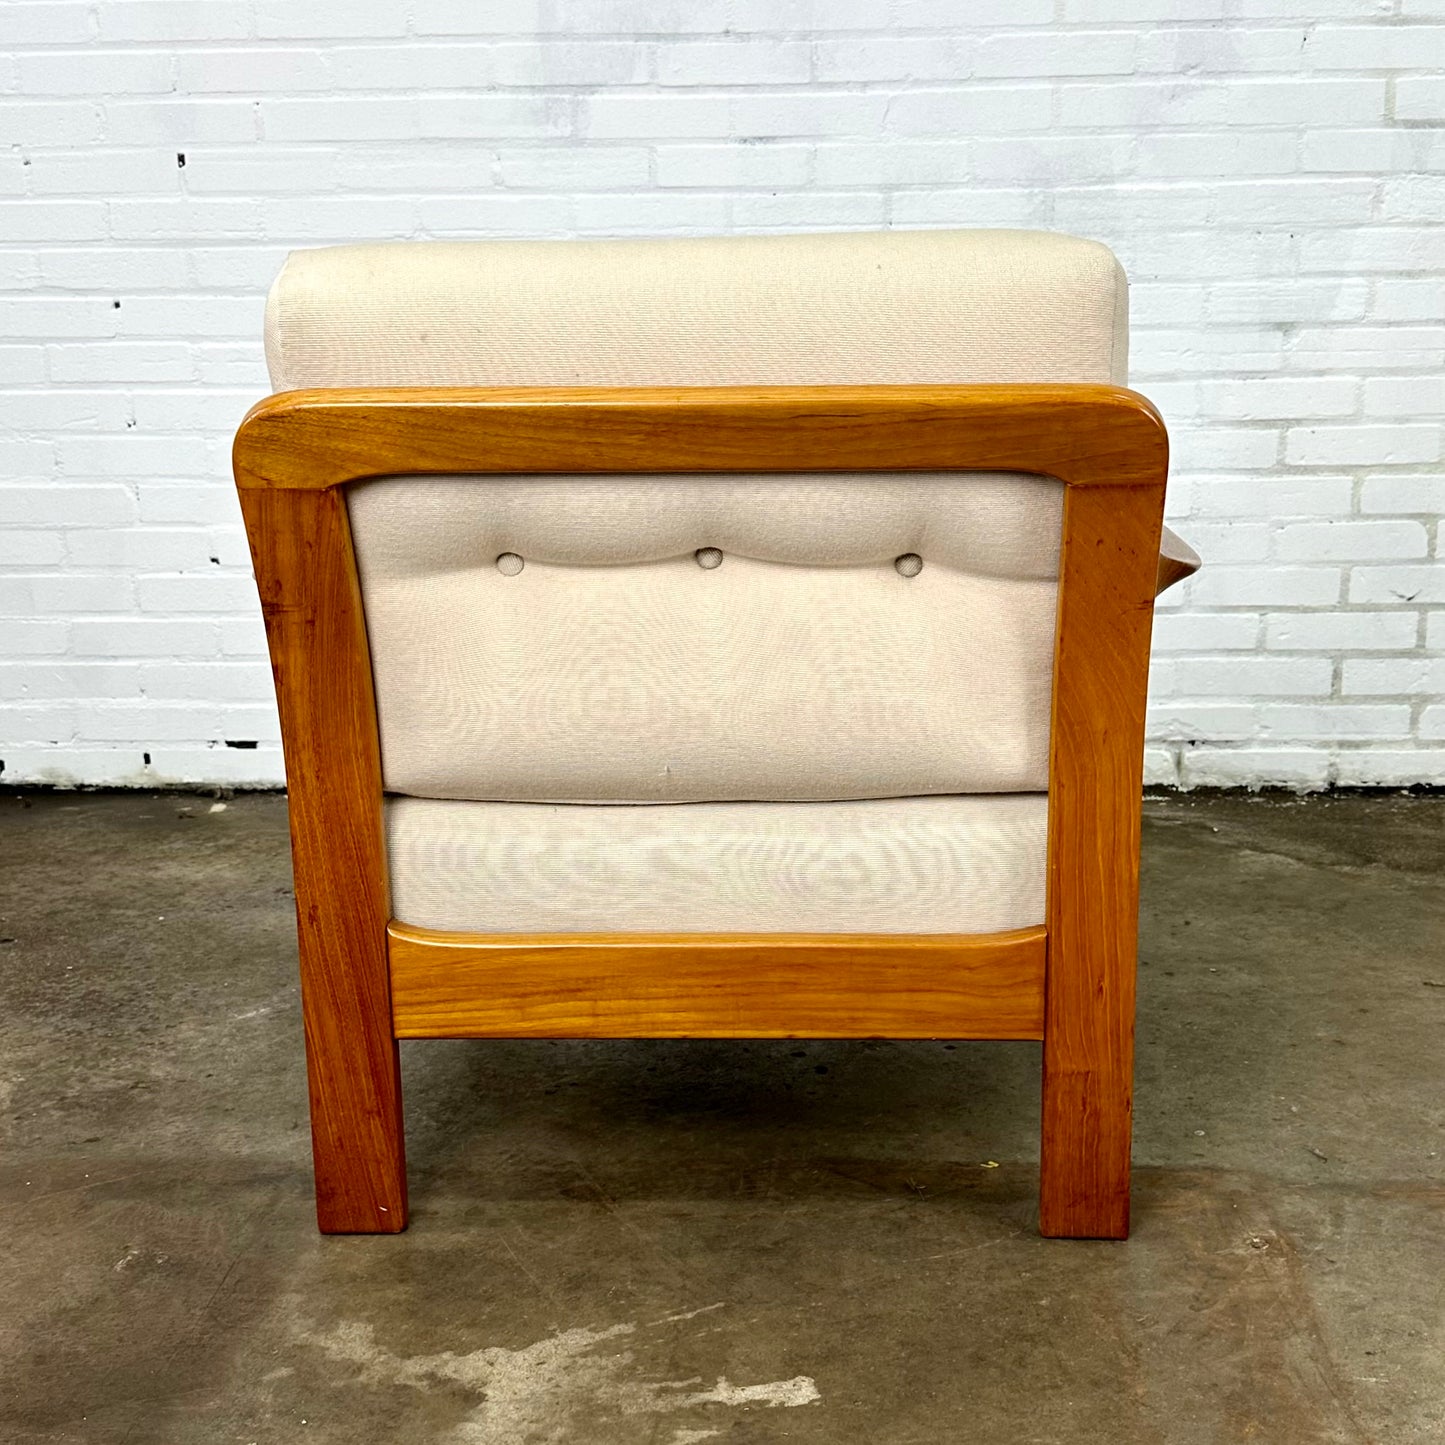 Vintage Danish design lounge chair